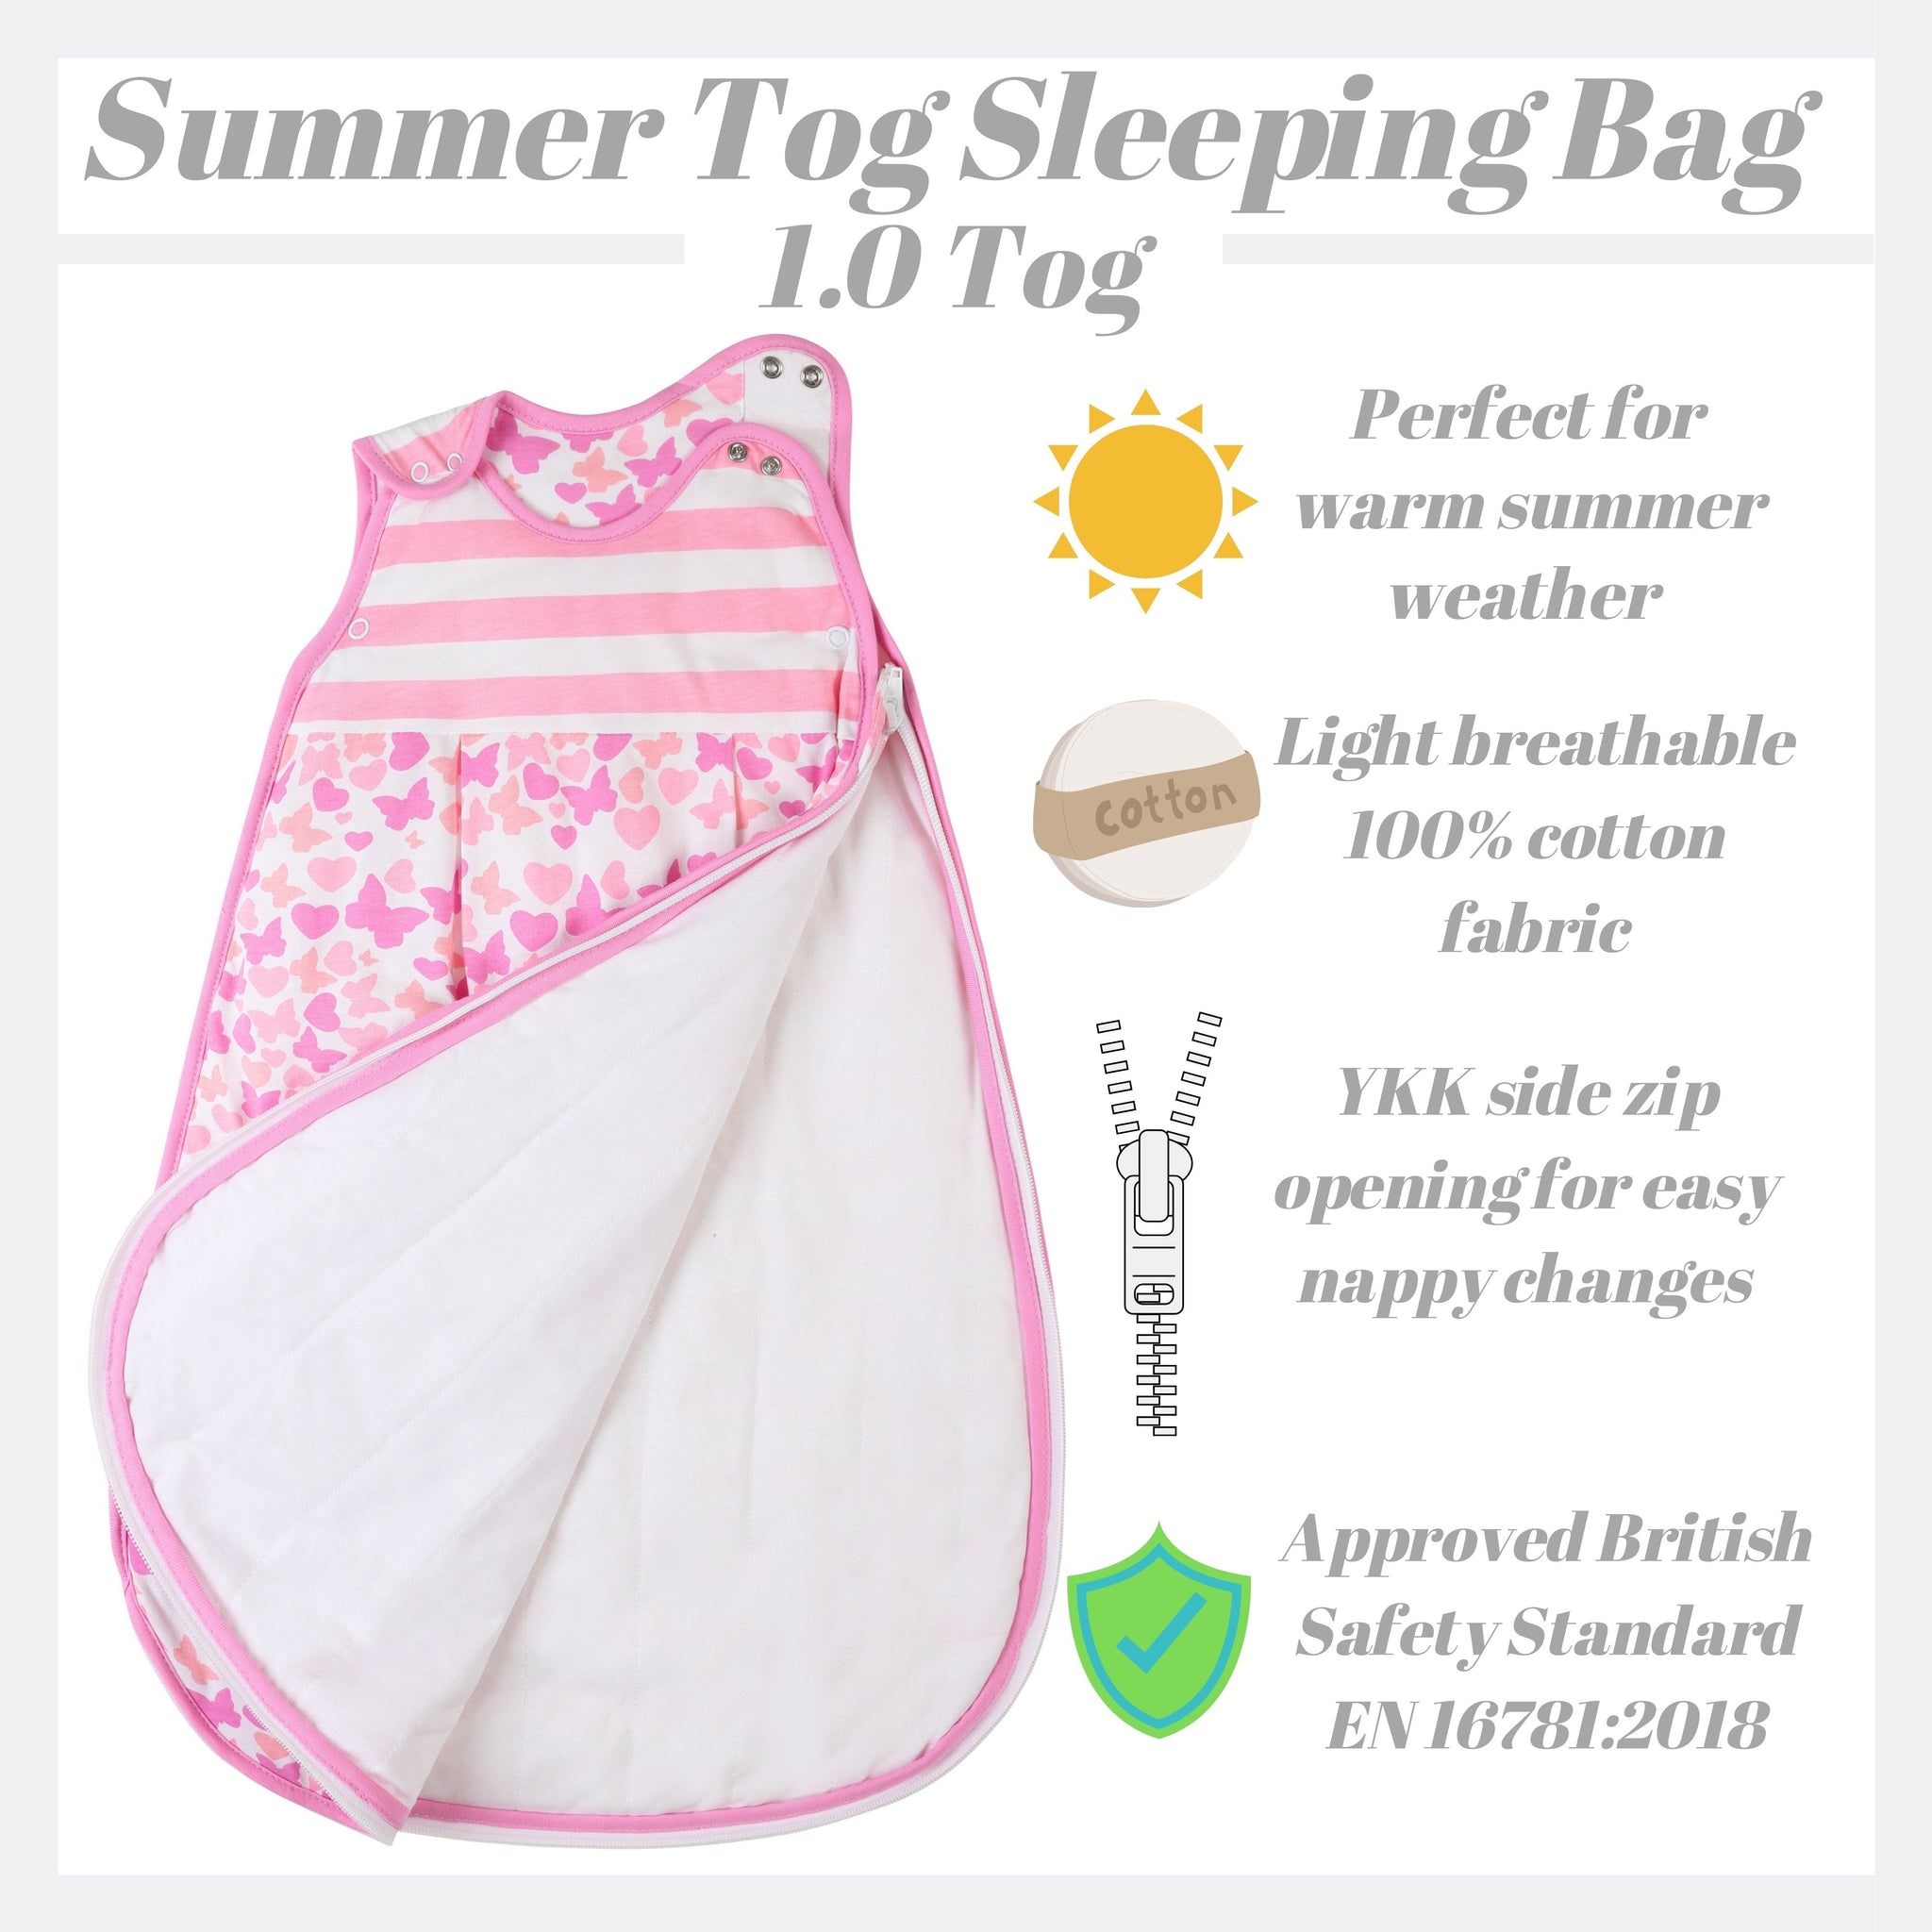 Snoozebag Baby Sleeping Bag - Butterflies & Hearts - Summer 1.0 Tog